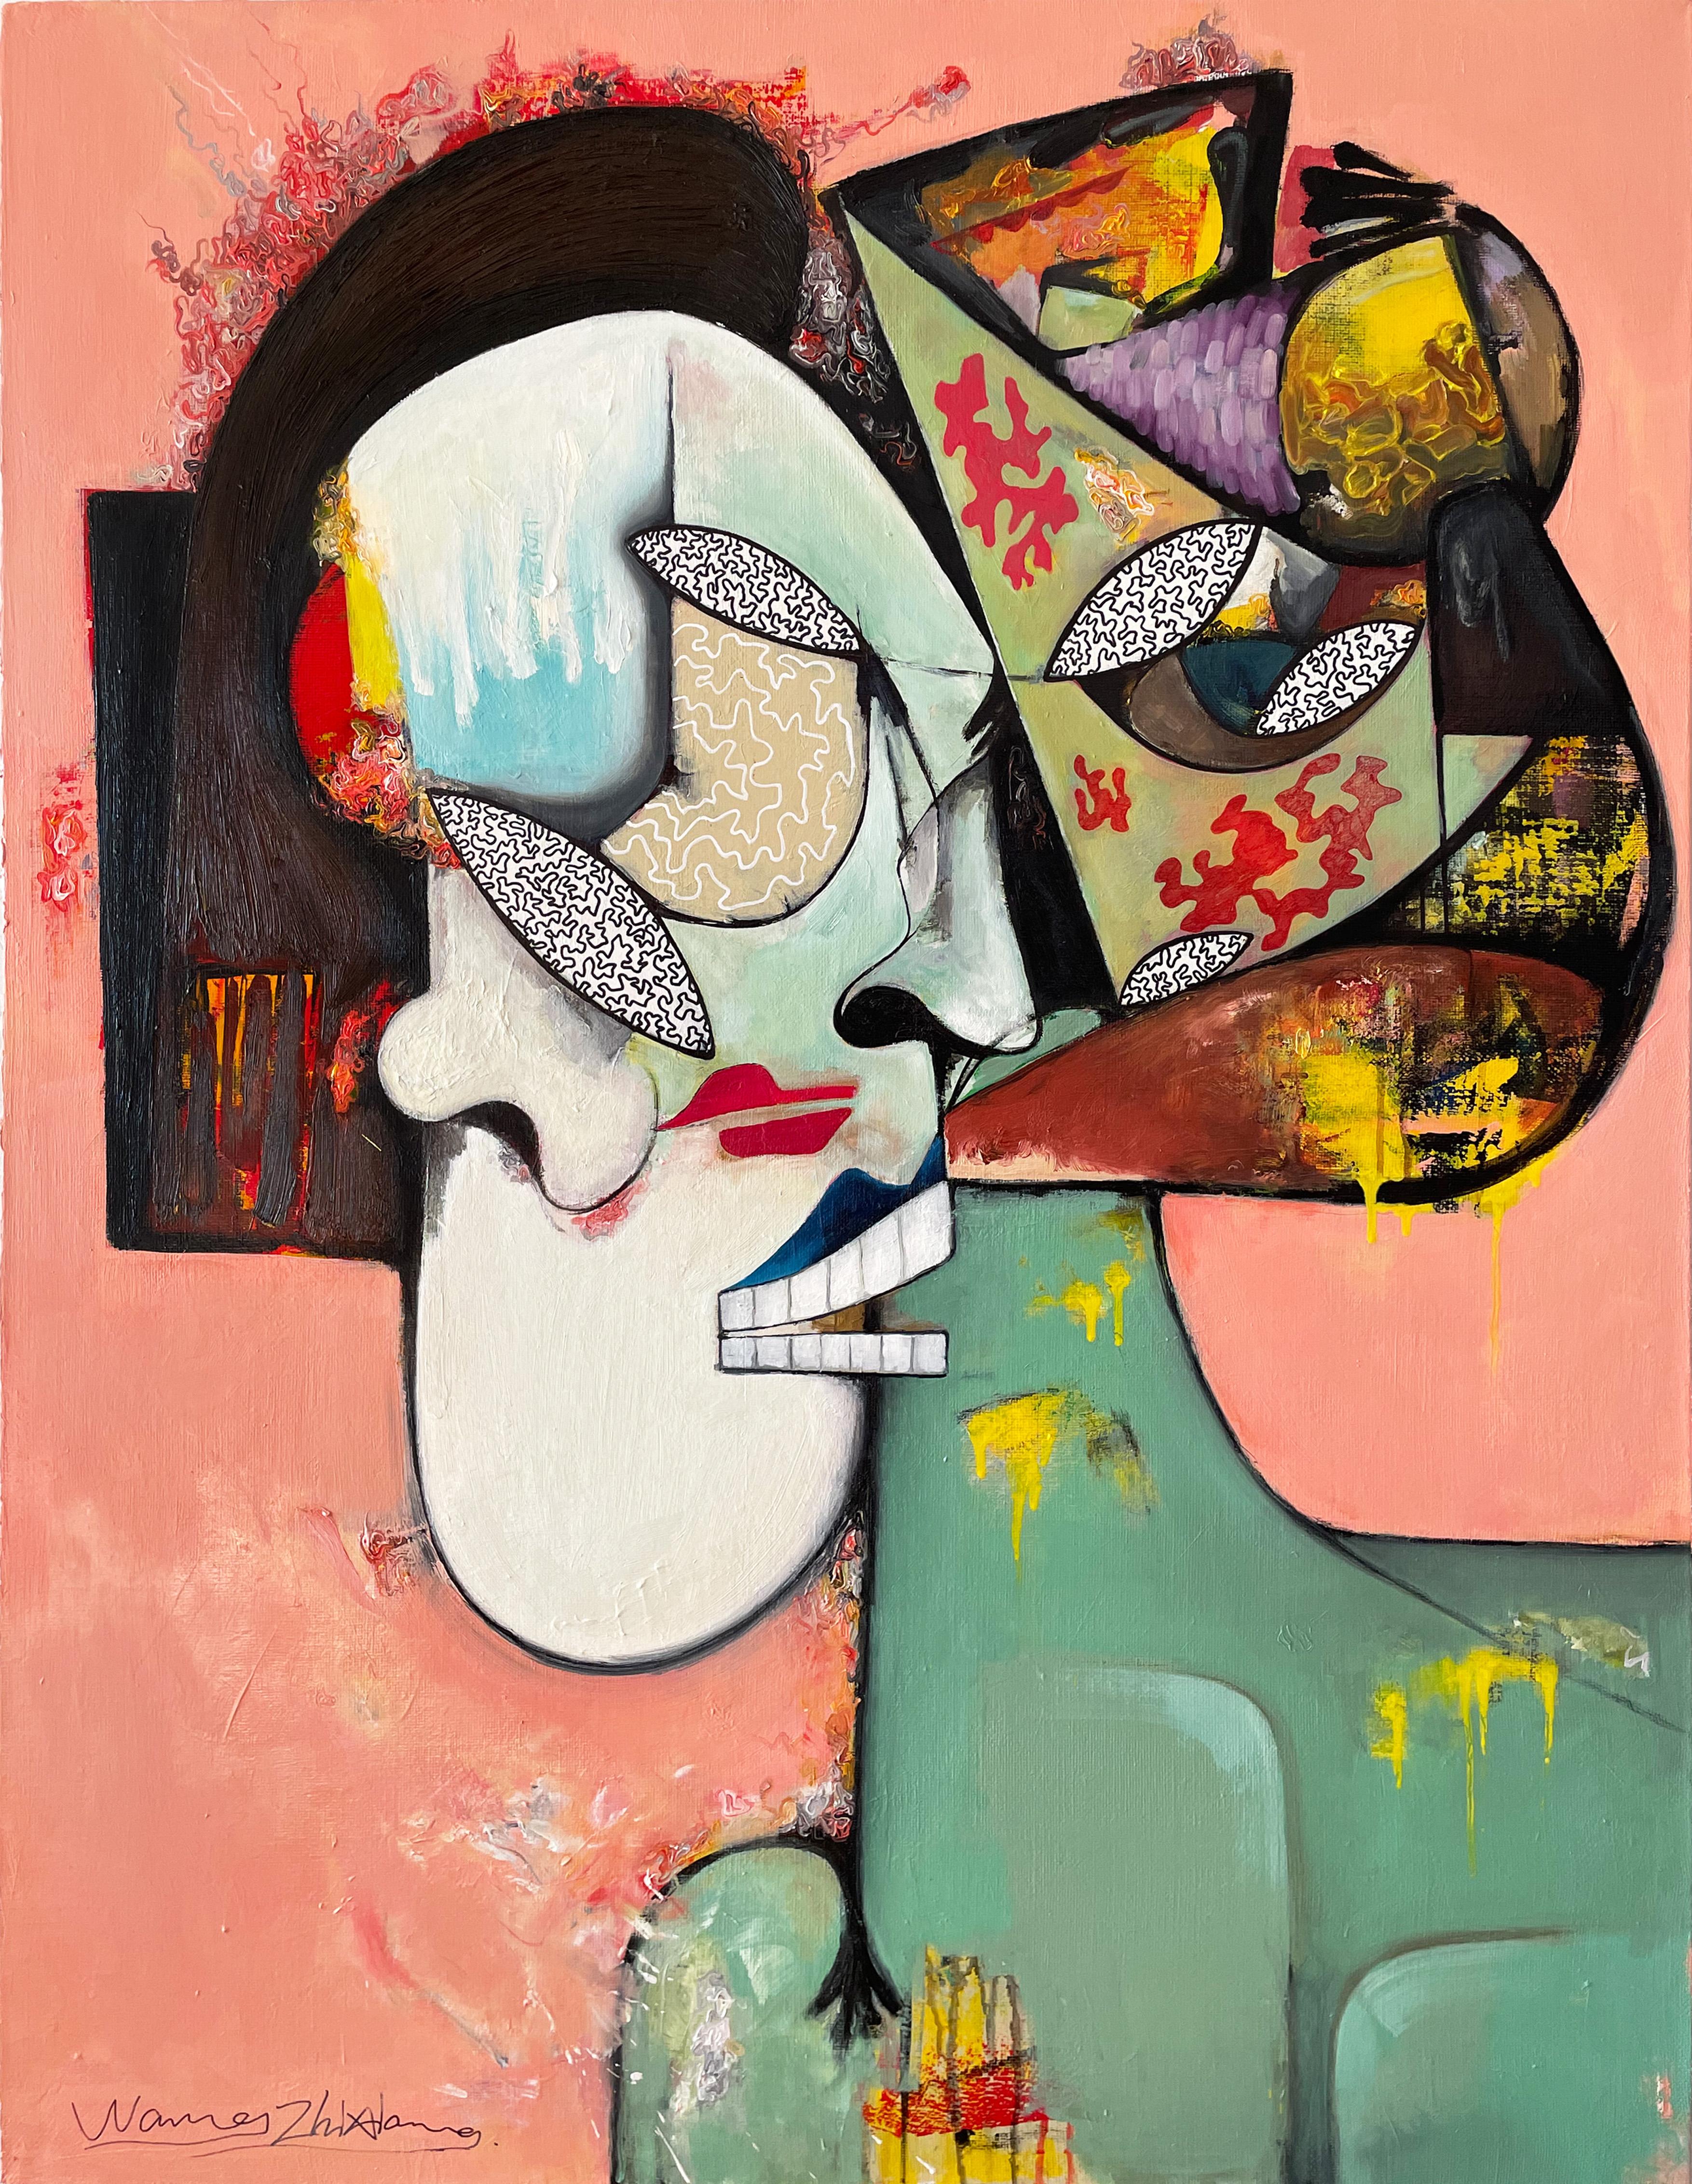 Allergies n° 23, Art contemporain, Expressionniste abstrait, Portrait